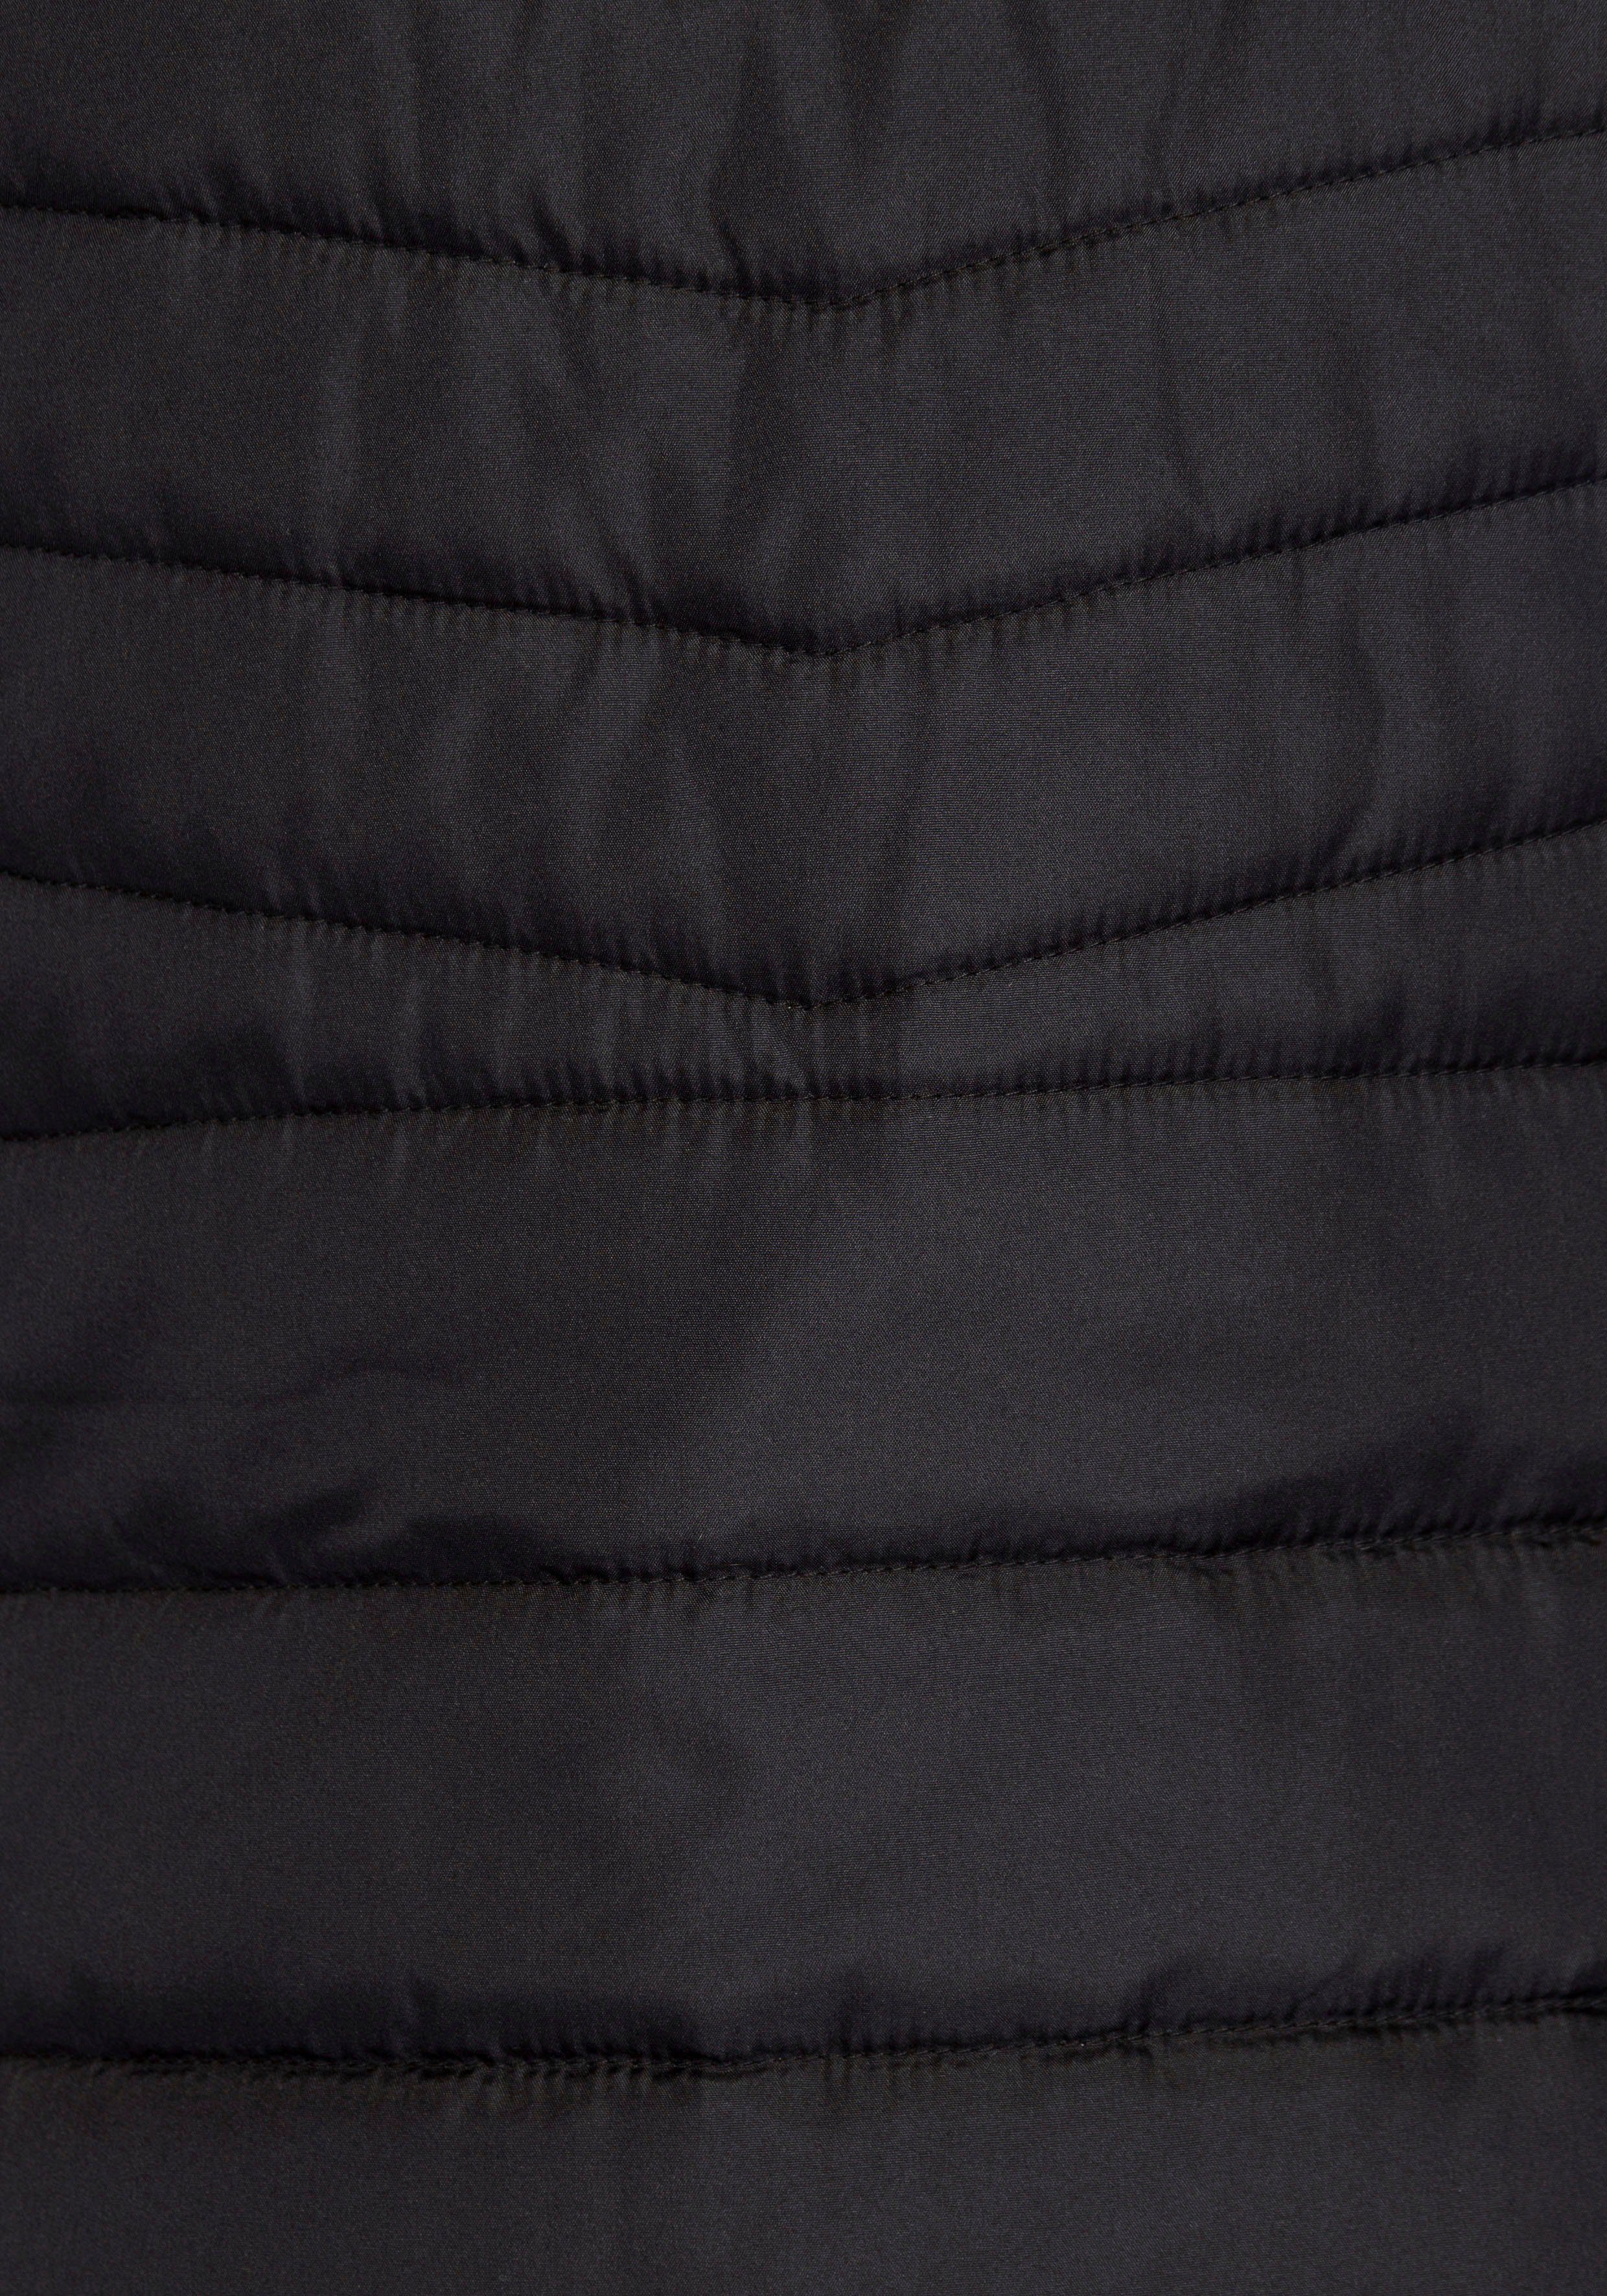 KangaROOS Langjacke (Steppjacke Material) im Materialmix aus modischen schwarz nachhaltigem